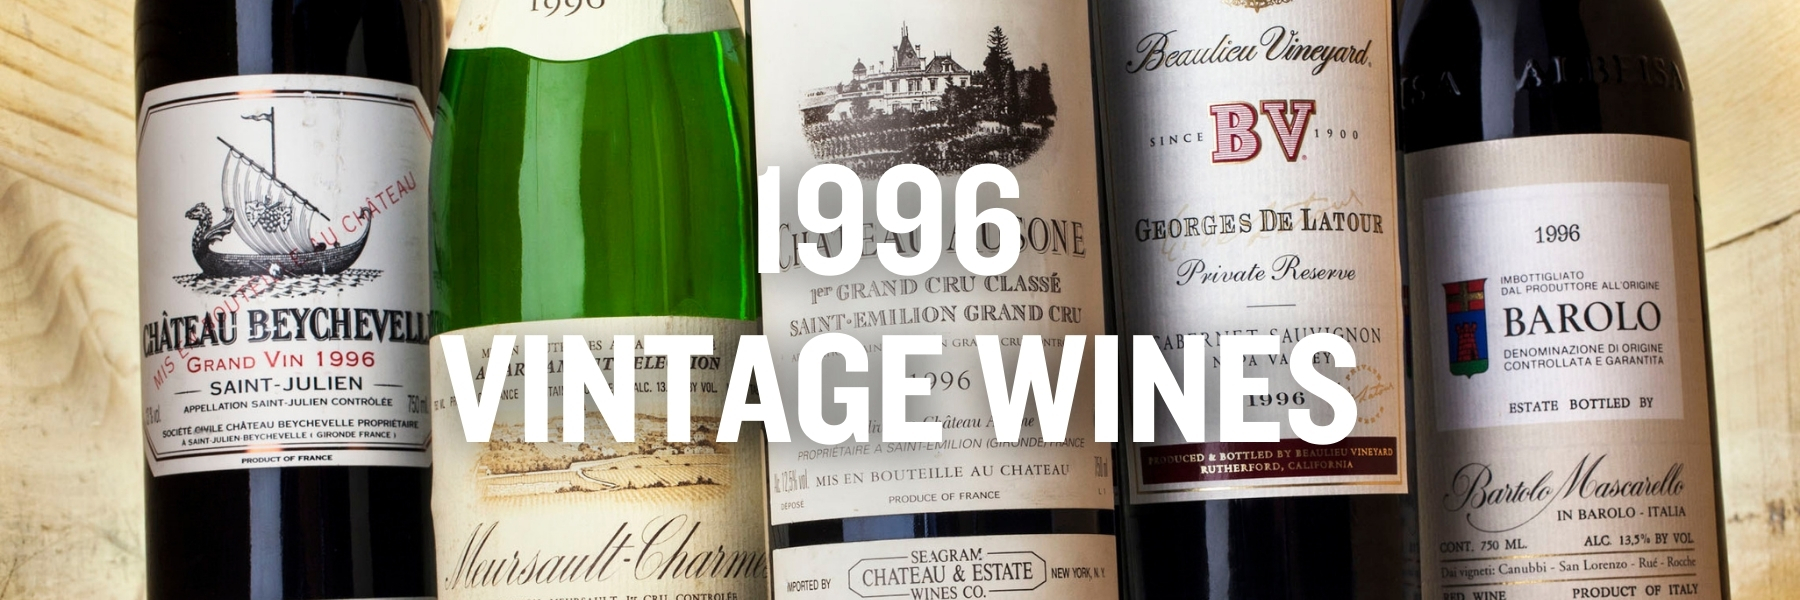 1996 vintage wines